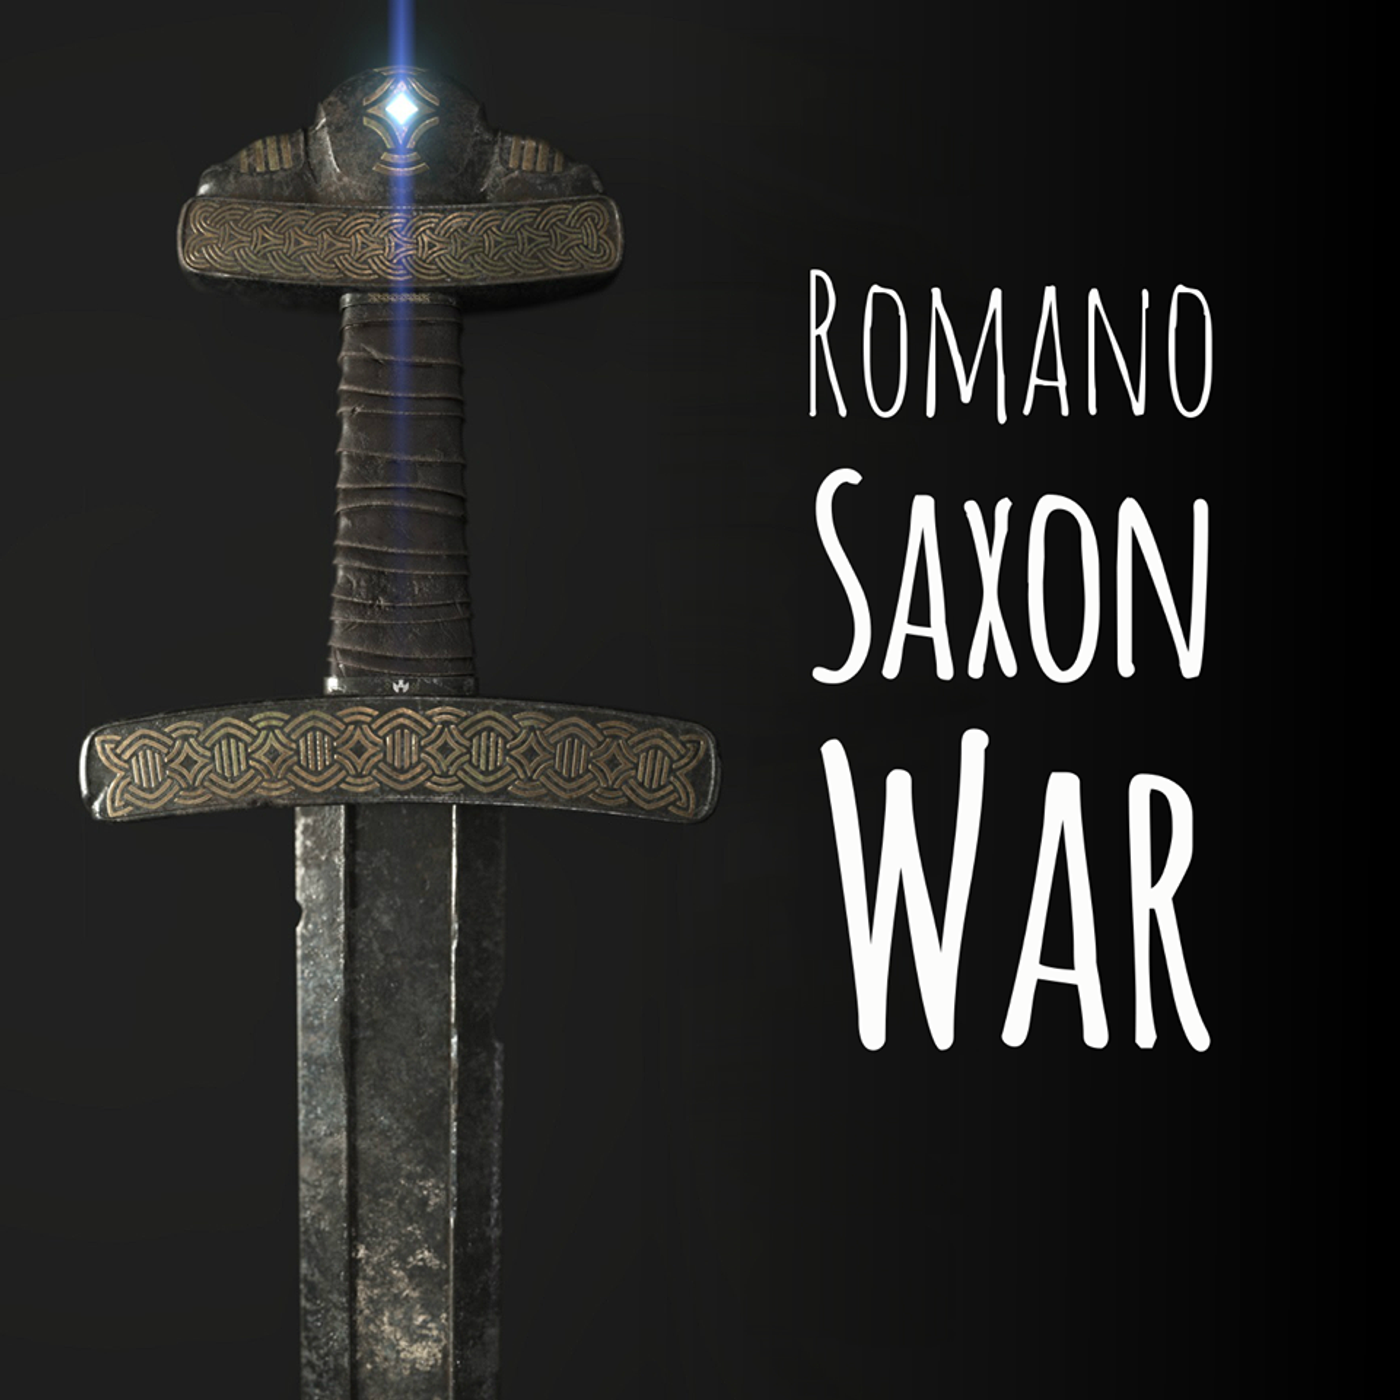 Romano Saxon War, Part 1